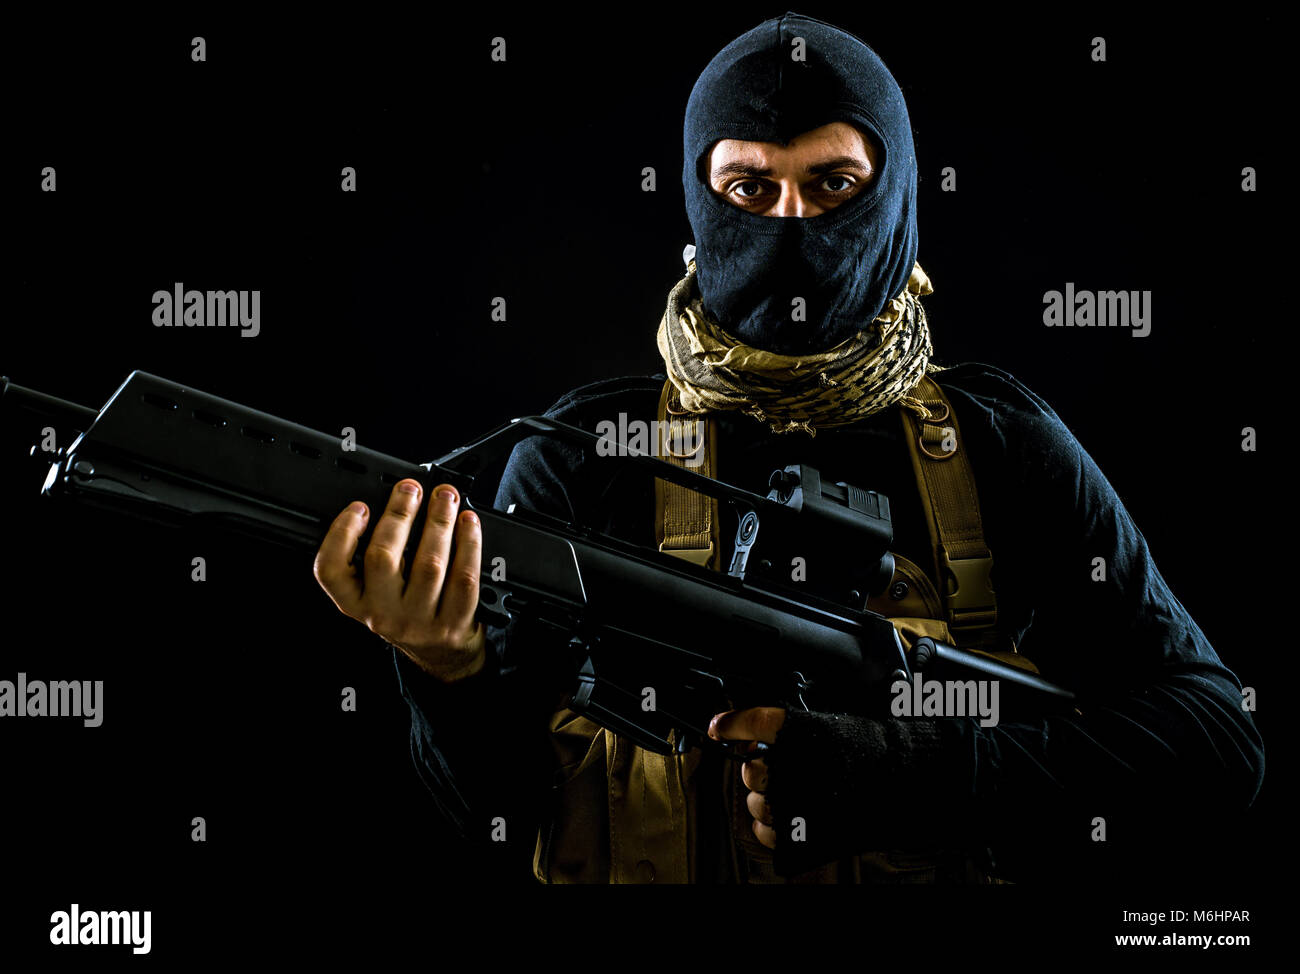 Terrorist criminal portrait Stock Photo